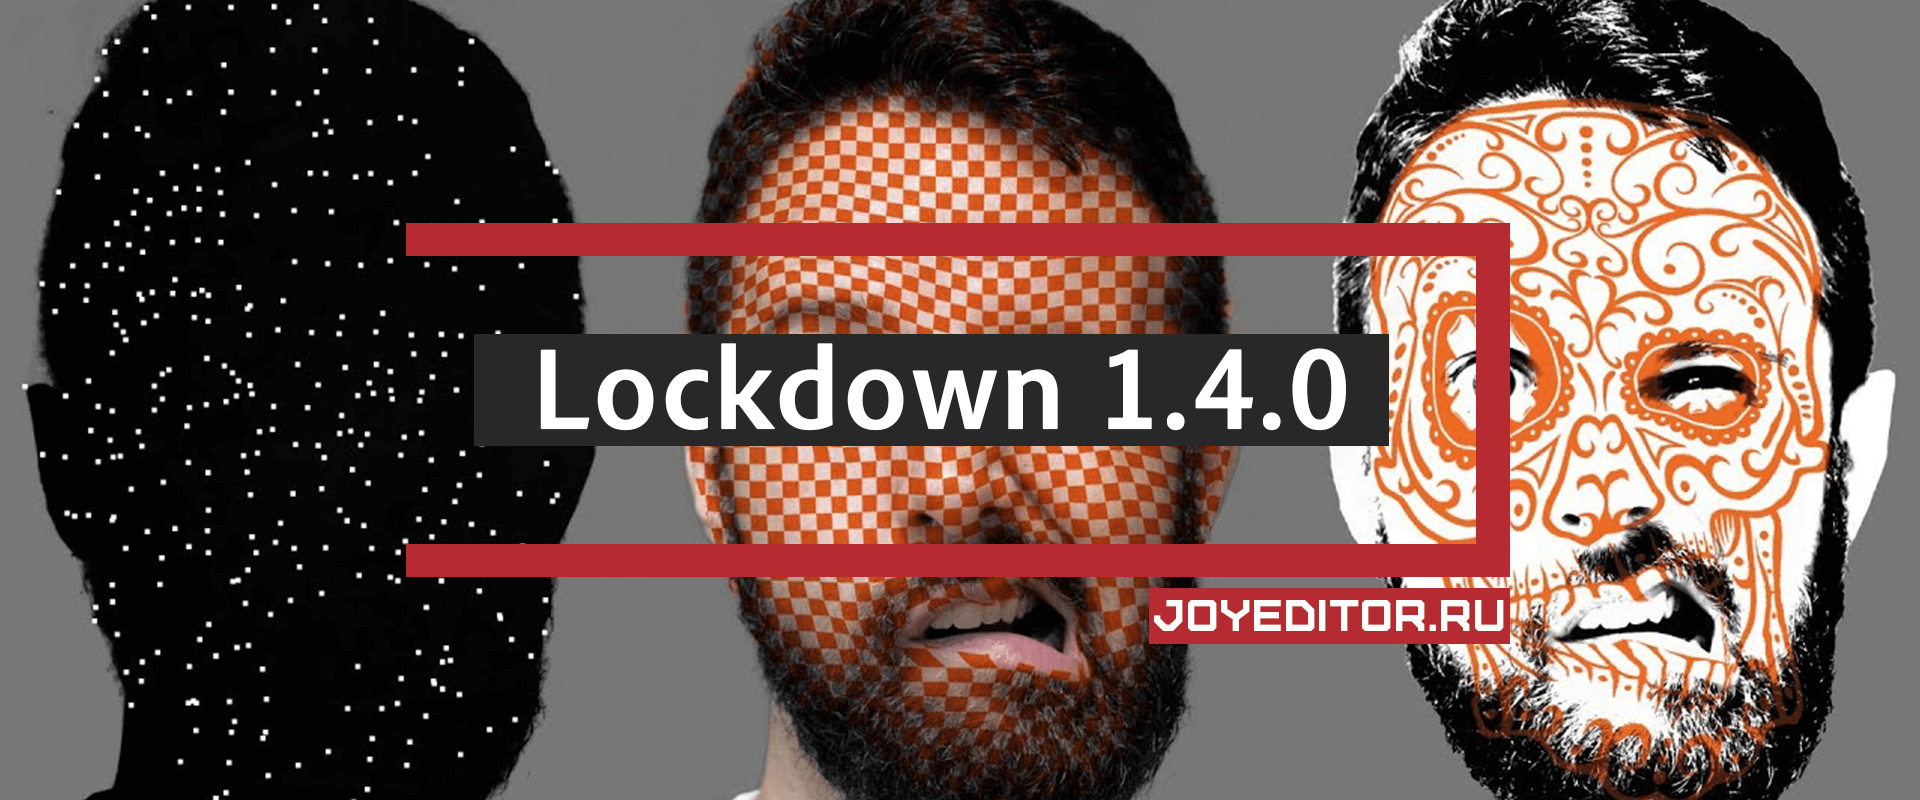 Lockdown 1.4.0